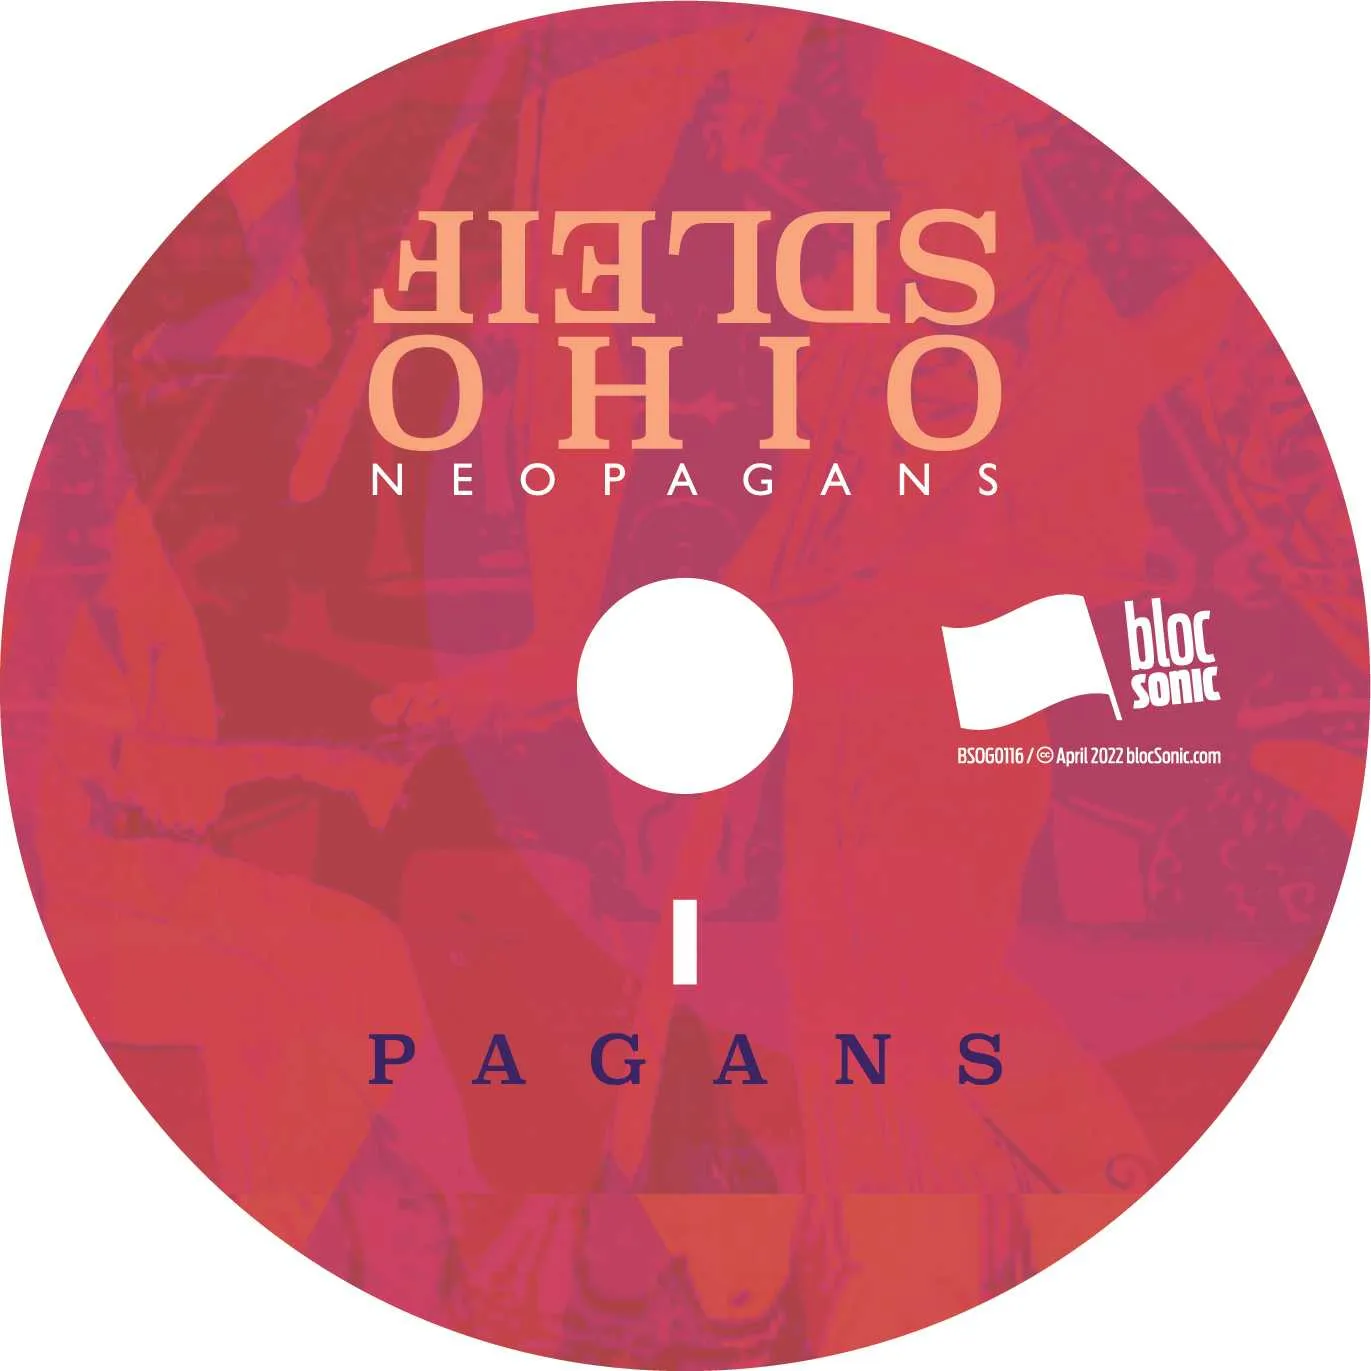 Album disc for “Neopagans” by Fields Ohio